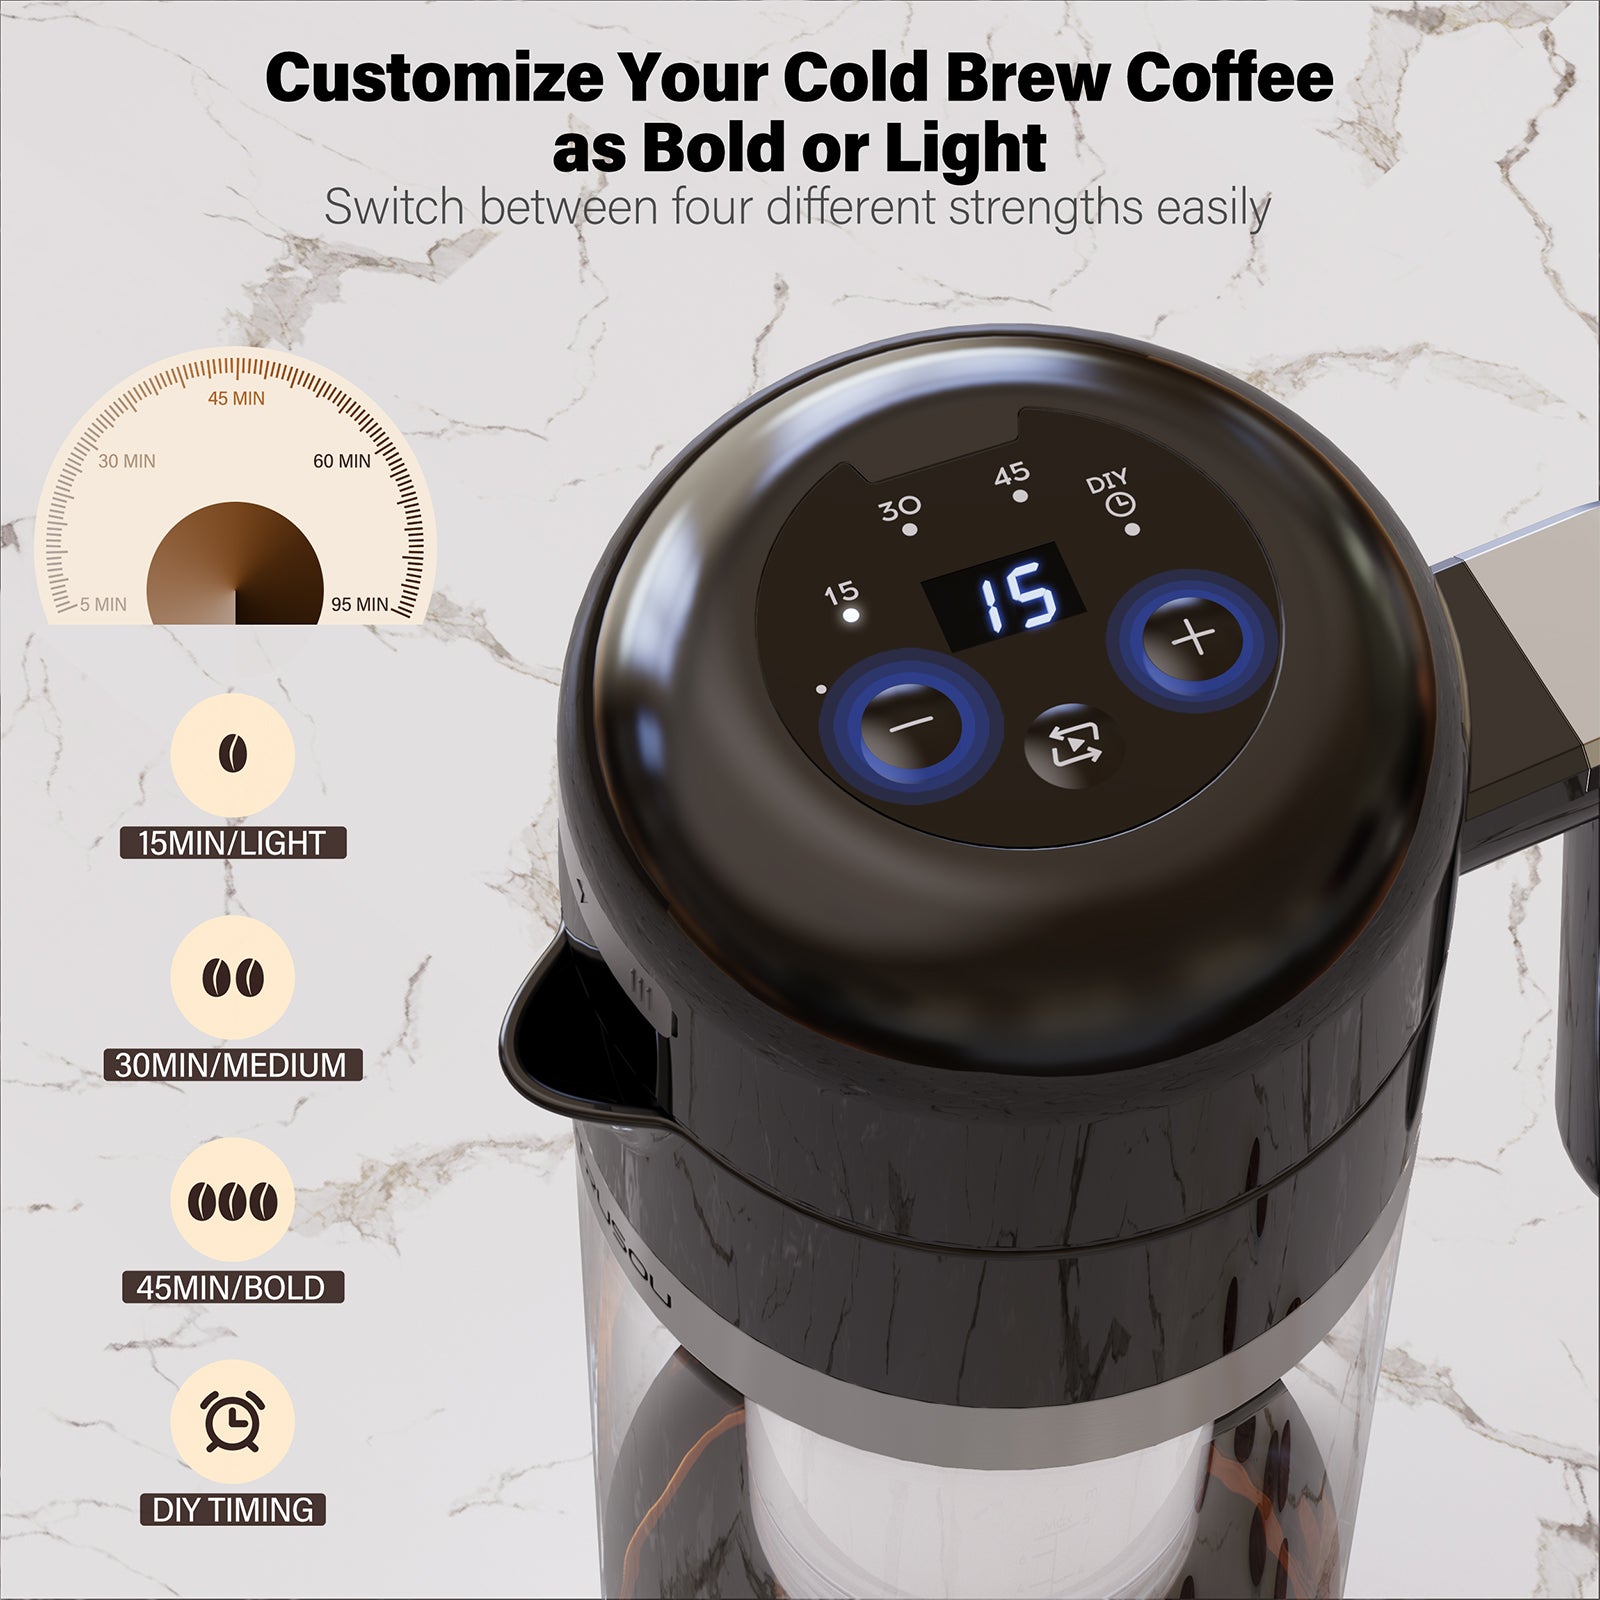 Buy Cold Brew Dispenser and Maker